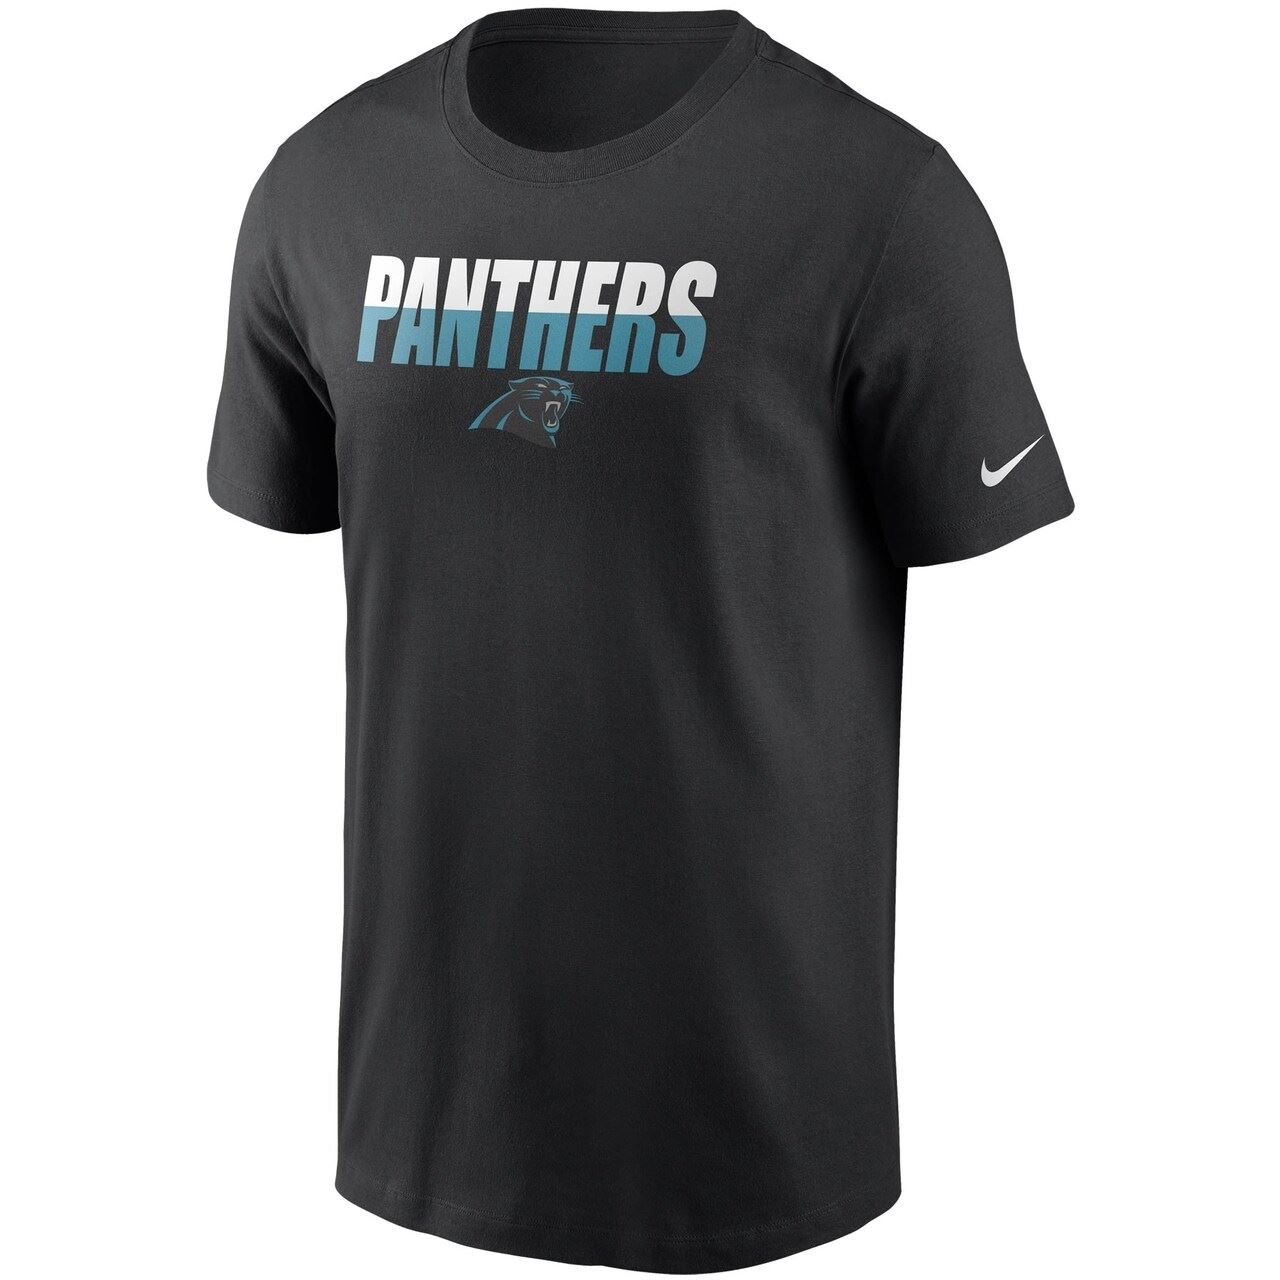 Carolina Panthers NFL Split Team Name Essential Tee Black T-Shirt Nike